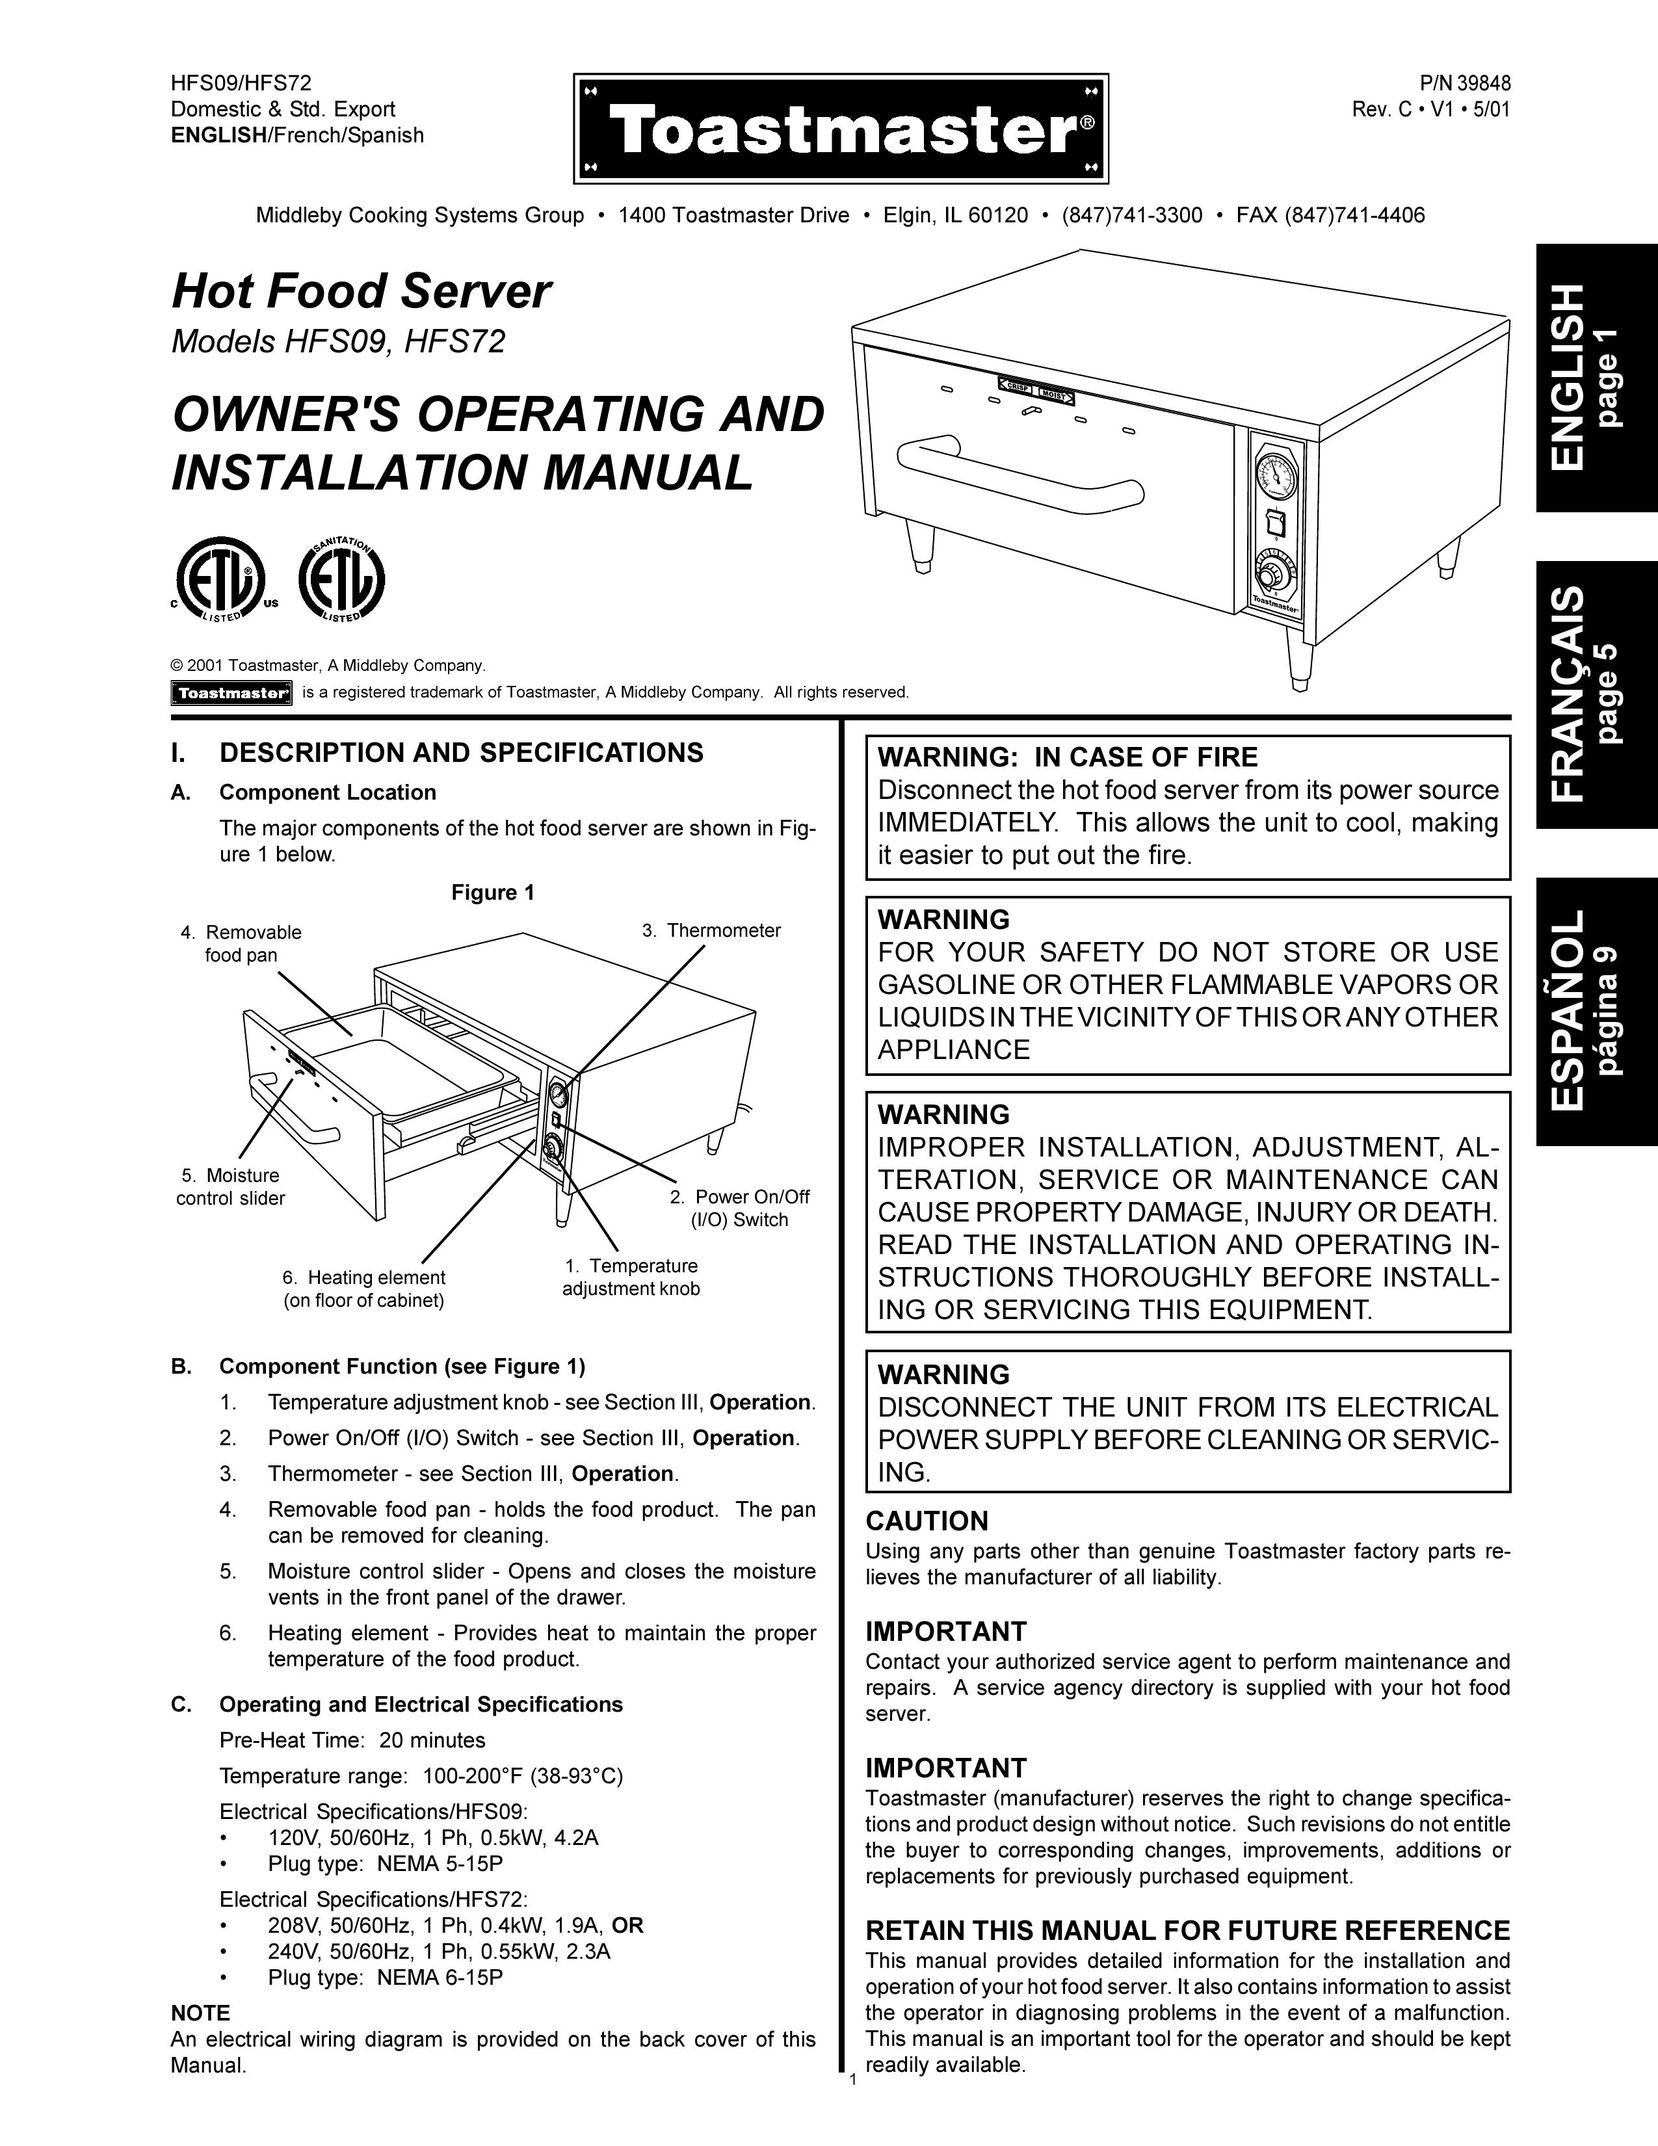 Toastmaster HFS09 Food Warmer User Manual